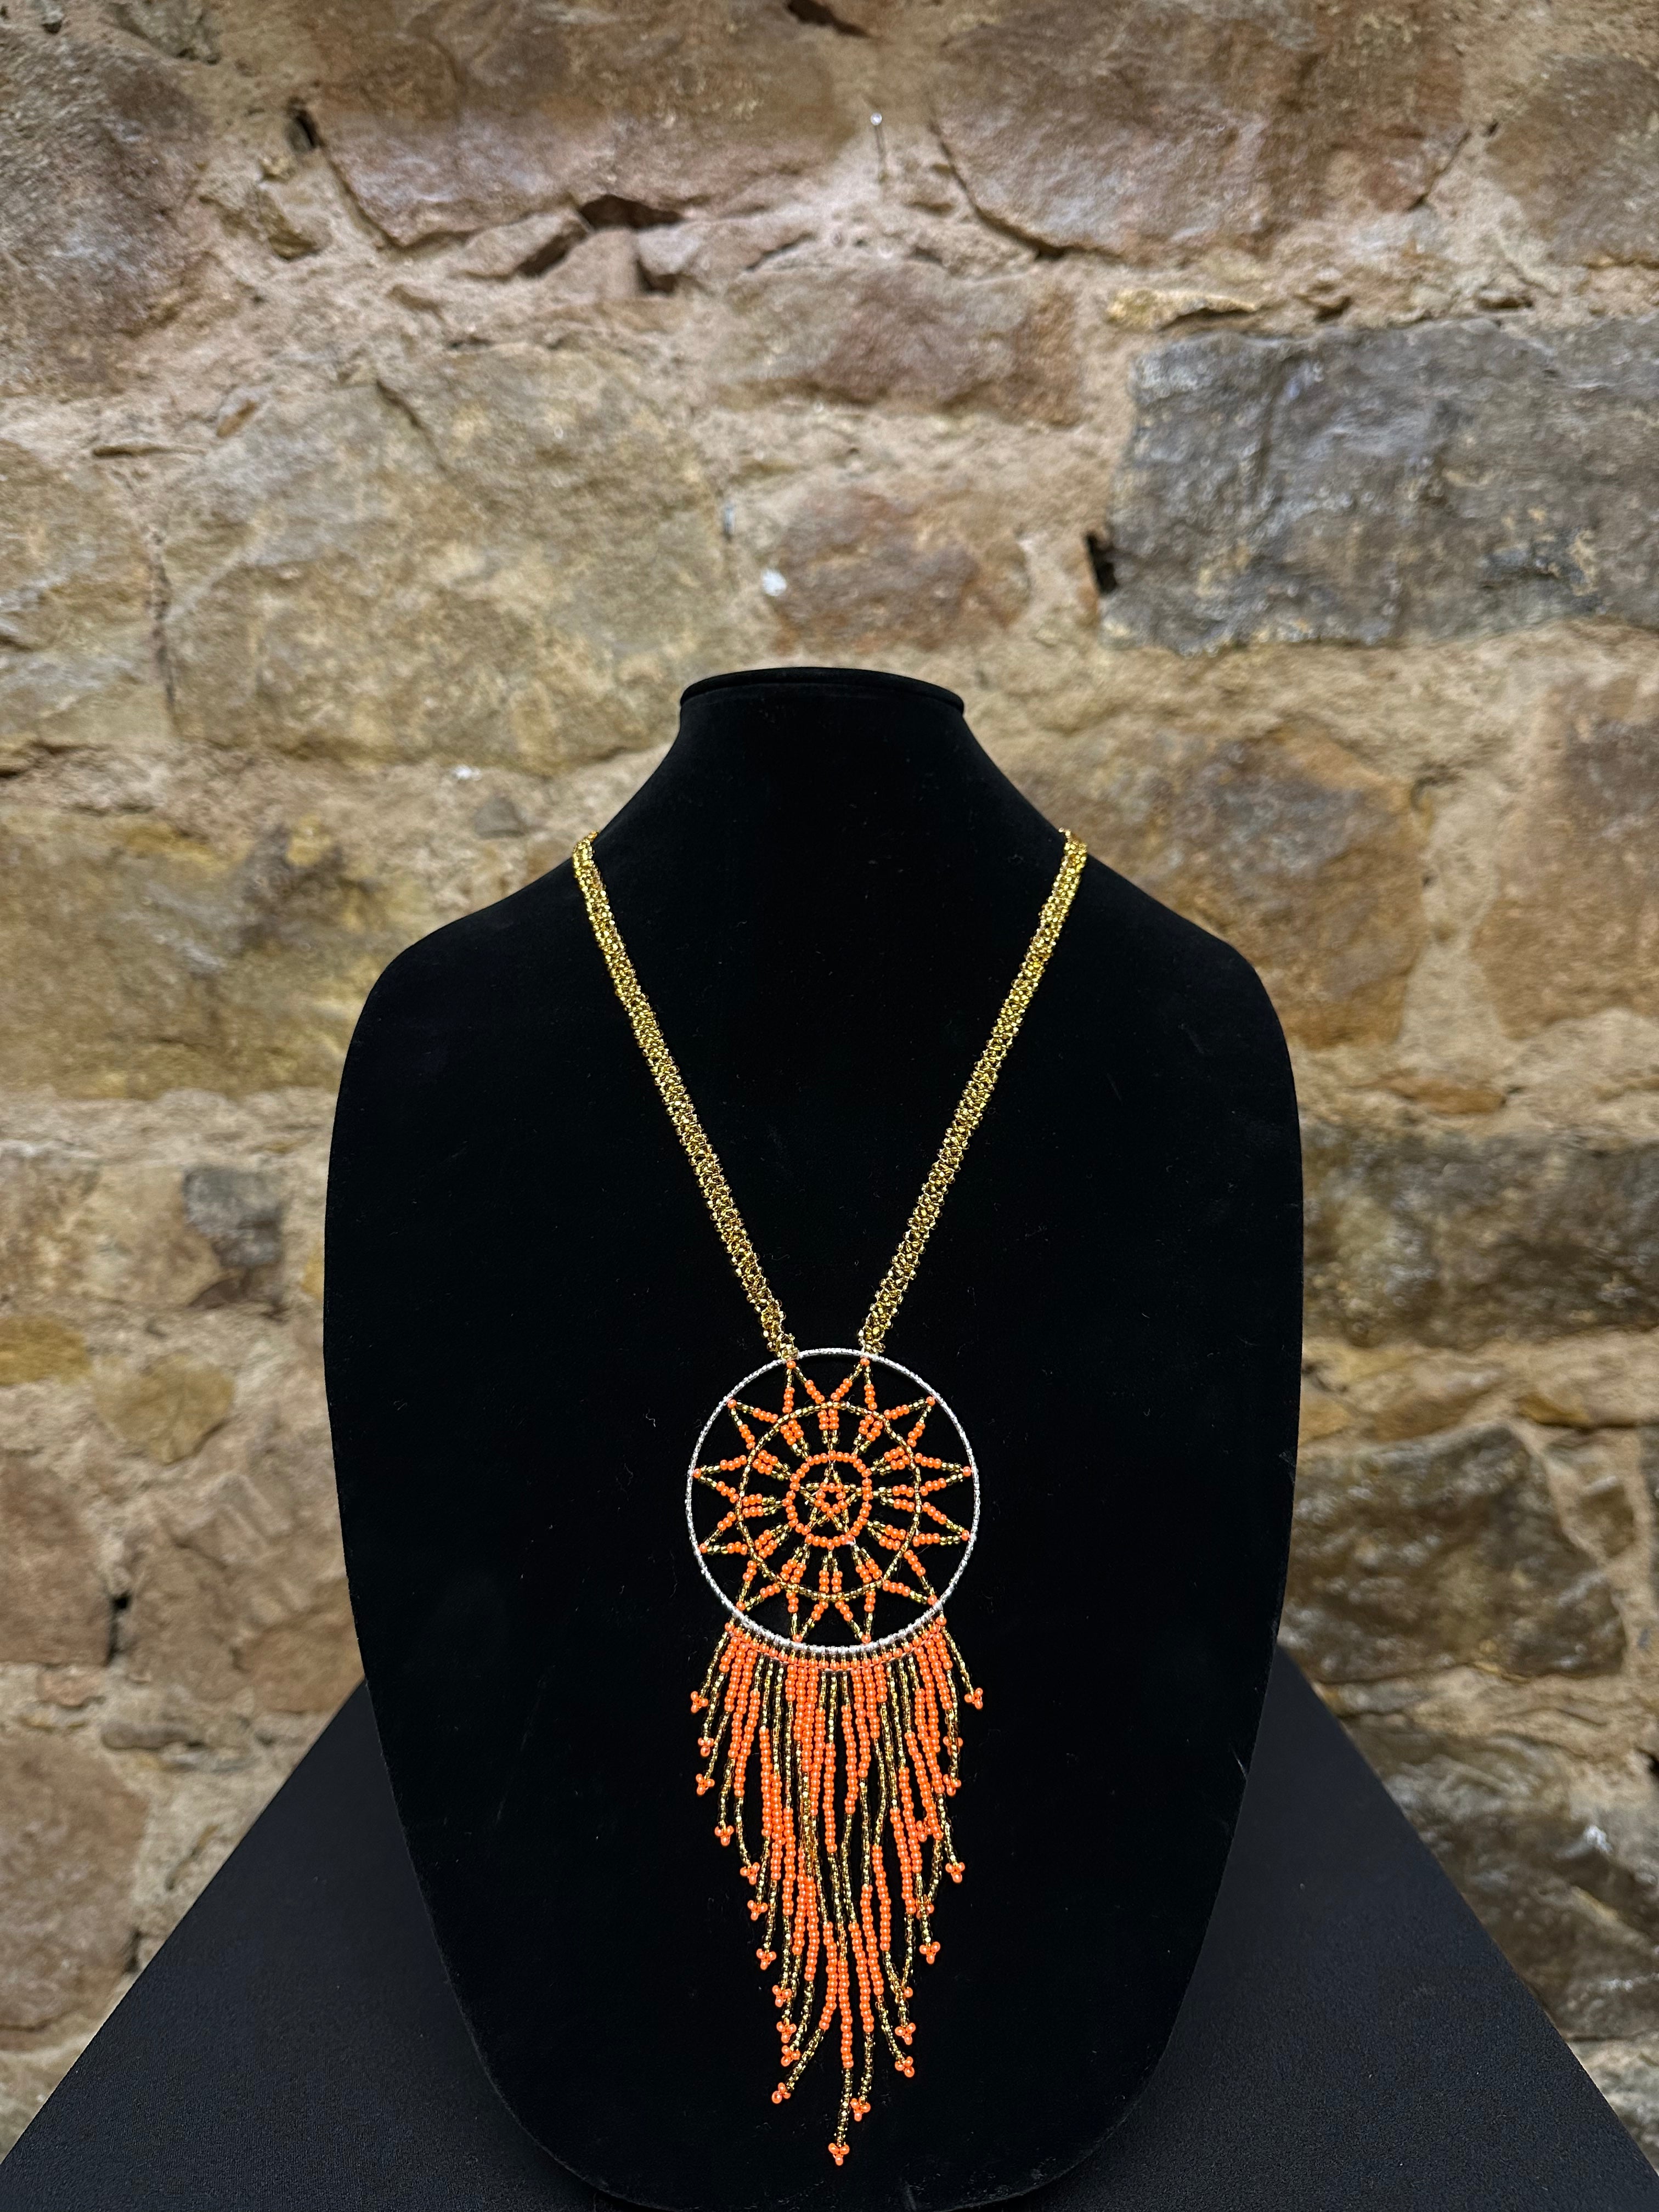 Bvlgari DIVAS' DREAM Necklace in 18KT Rose Gold with Gemstones | Bvlgari  jewelry, Jewelry branding, Gemstones